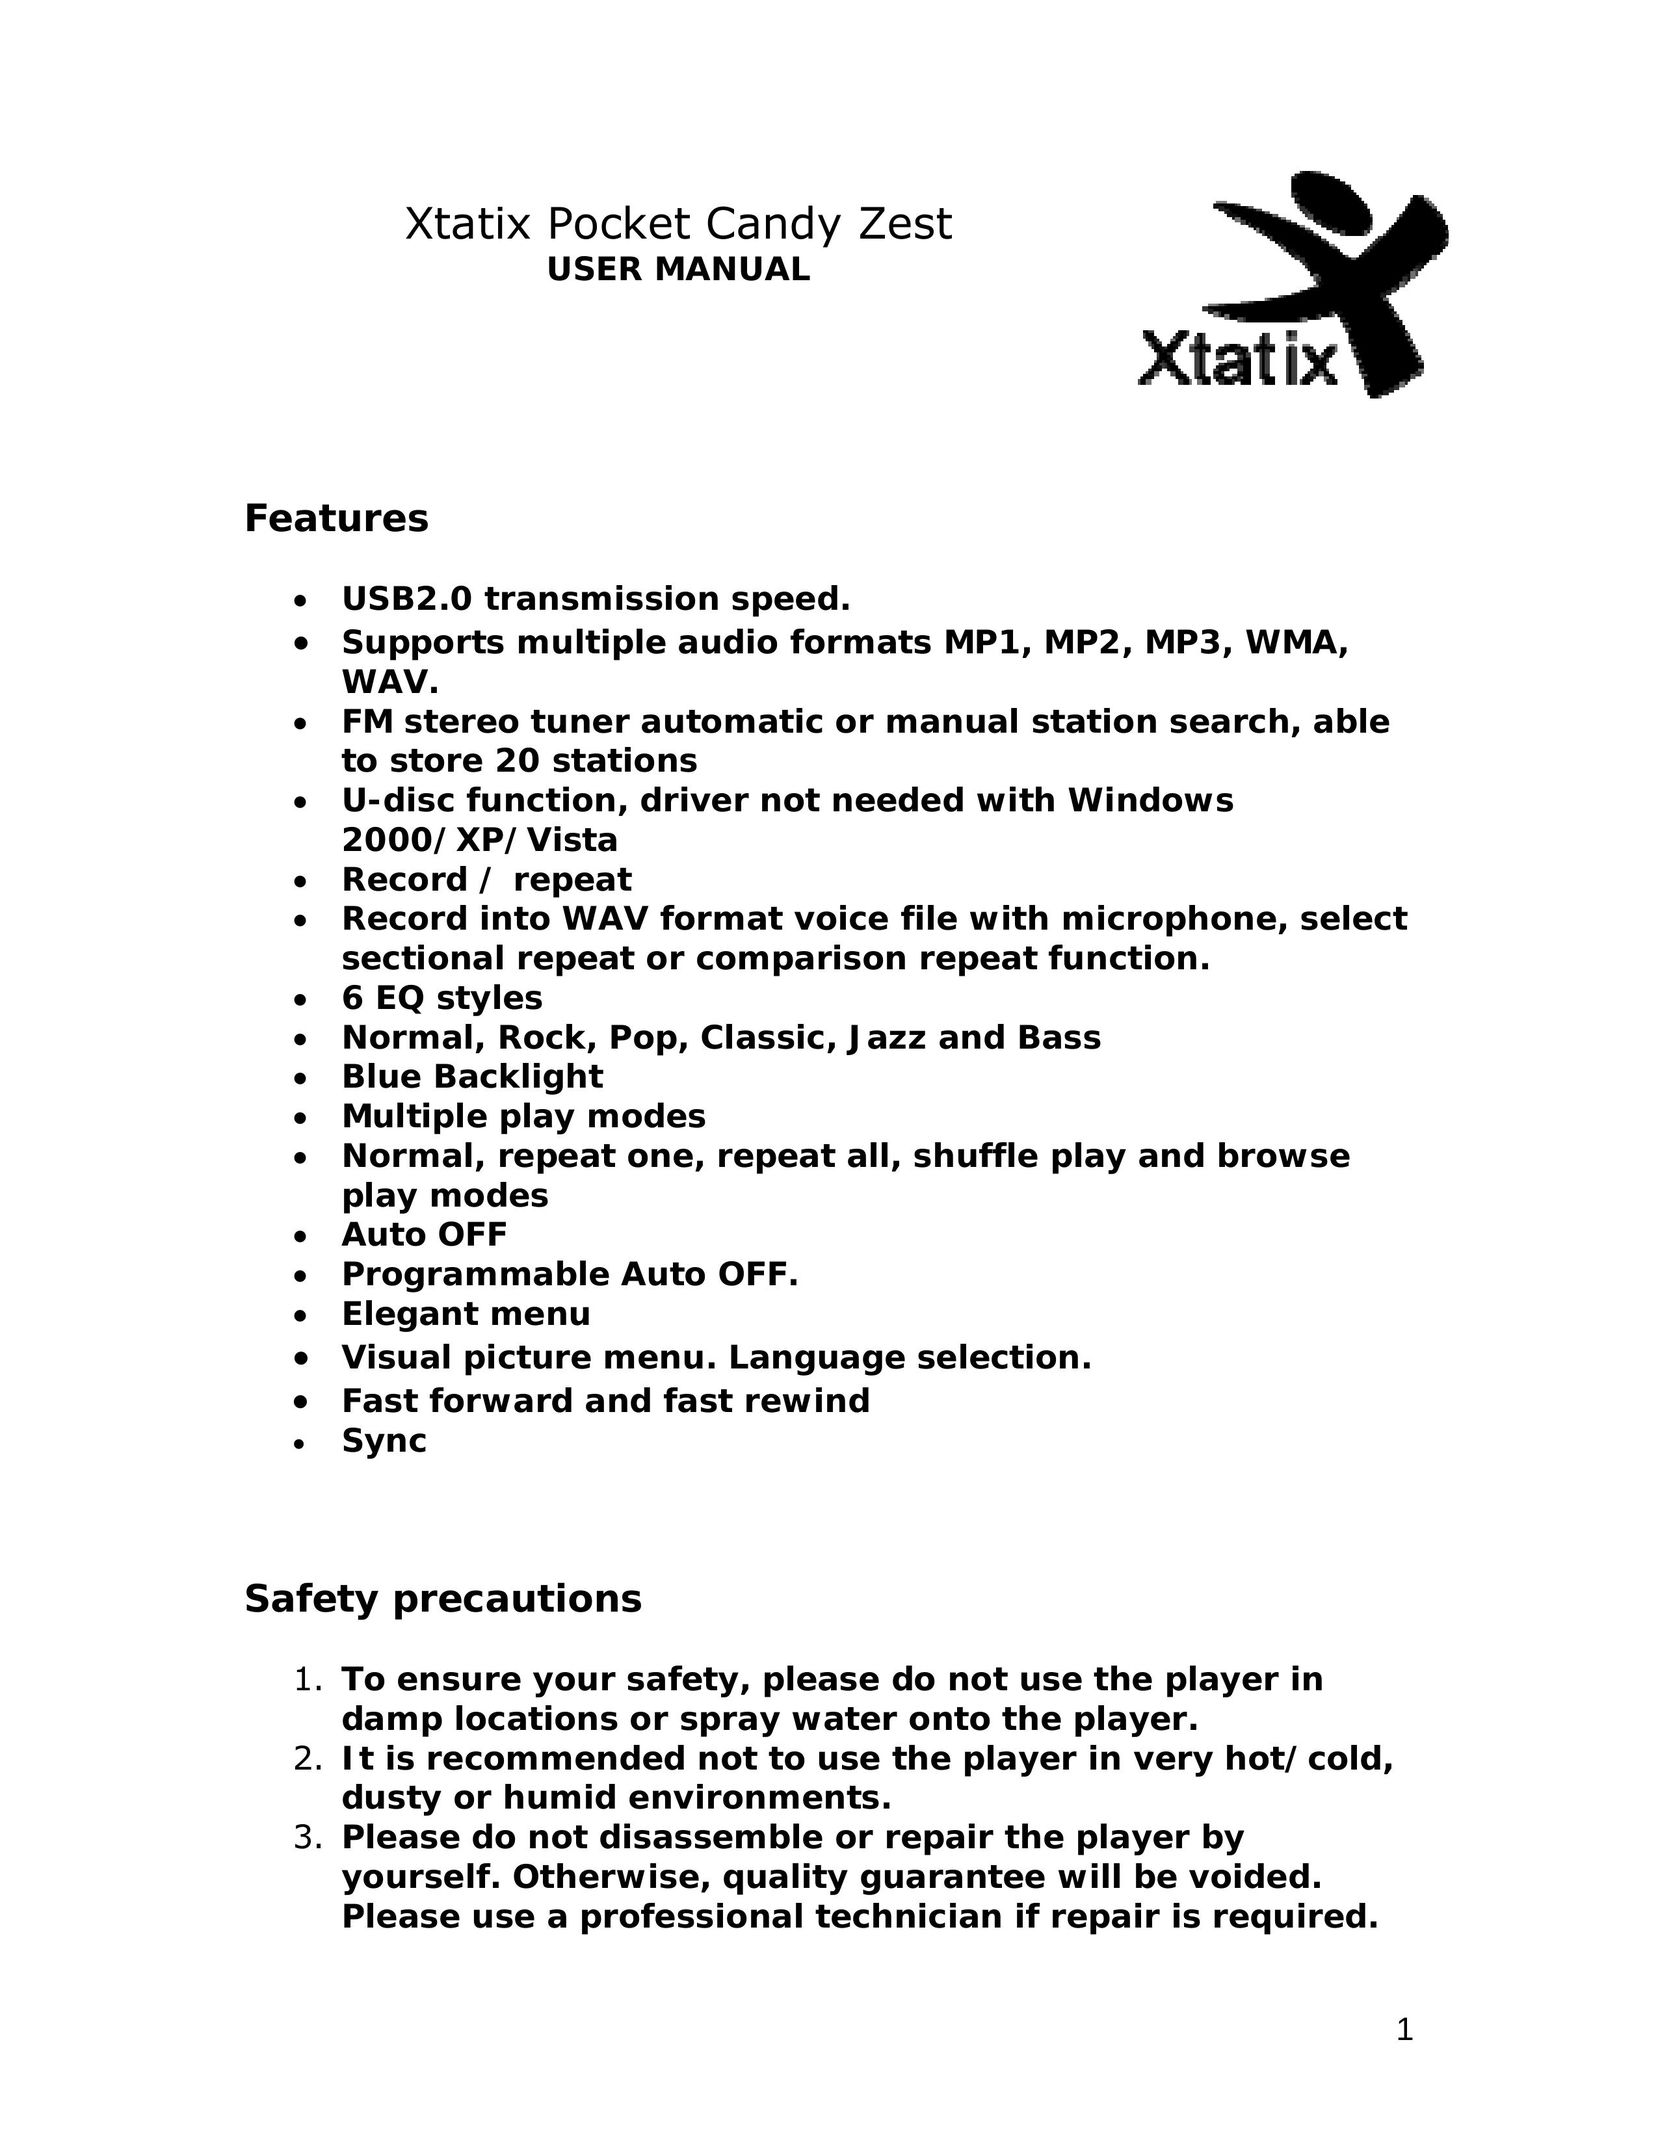 Xtatix Pocket Candy Zent MP3 Player User Manual